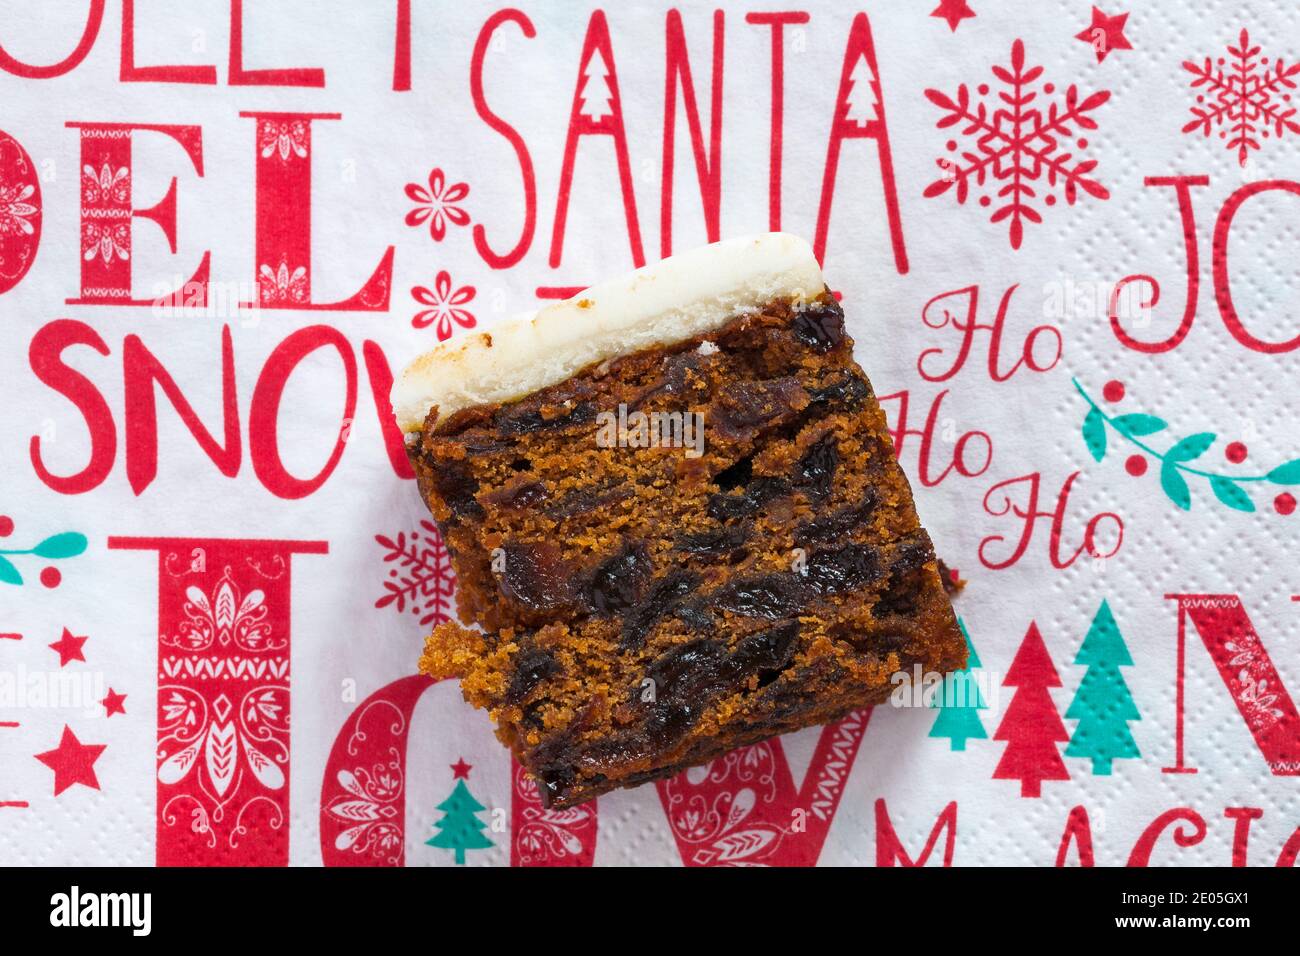 Slice of M&S Iced Fruit Cake Christmas Cake set on Christmas serviette napkin - UK festive Xmas Stock Photo